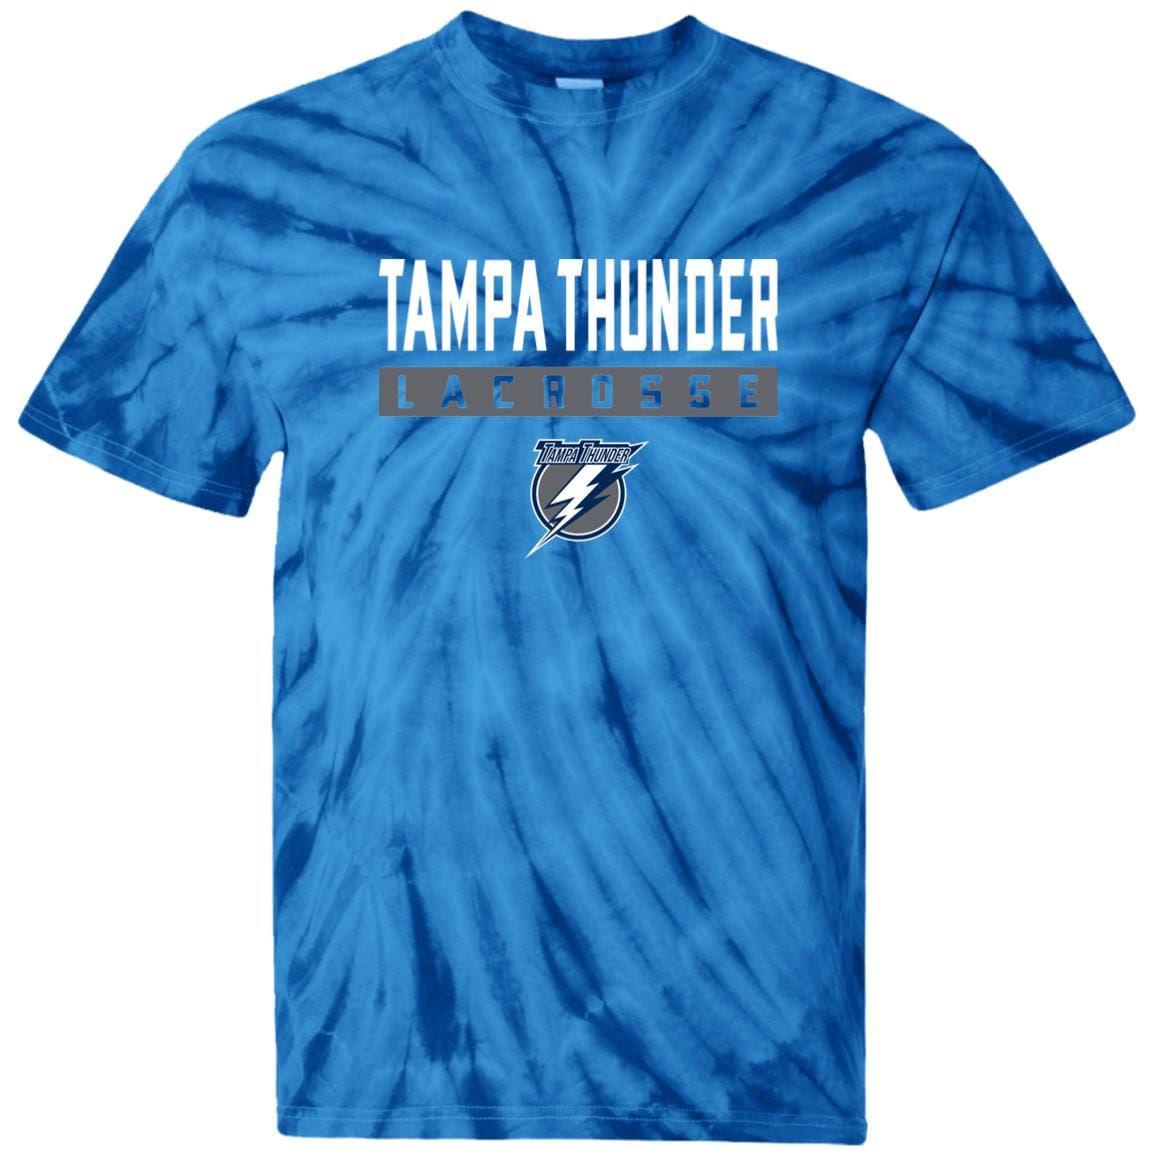 Tampa Thunder Lacrosse Adult Cotton Tie Dye T-Shirt Signature Lacrosse